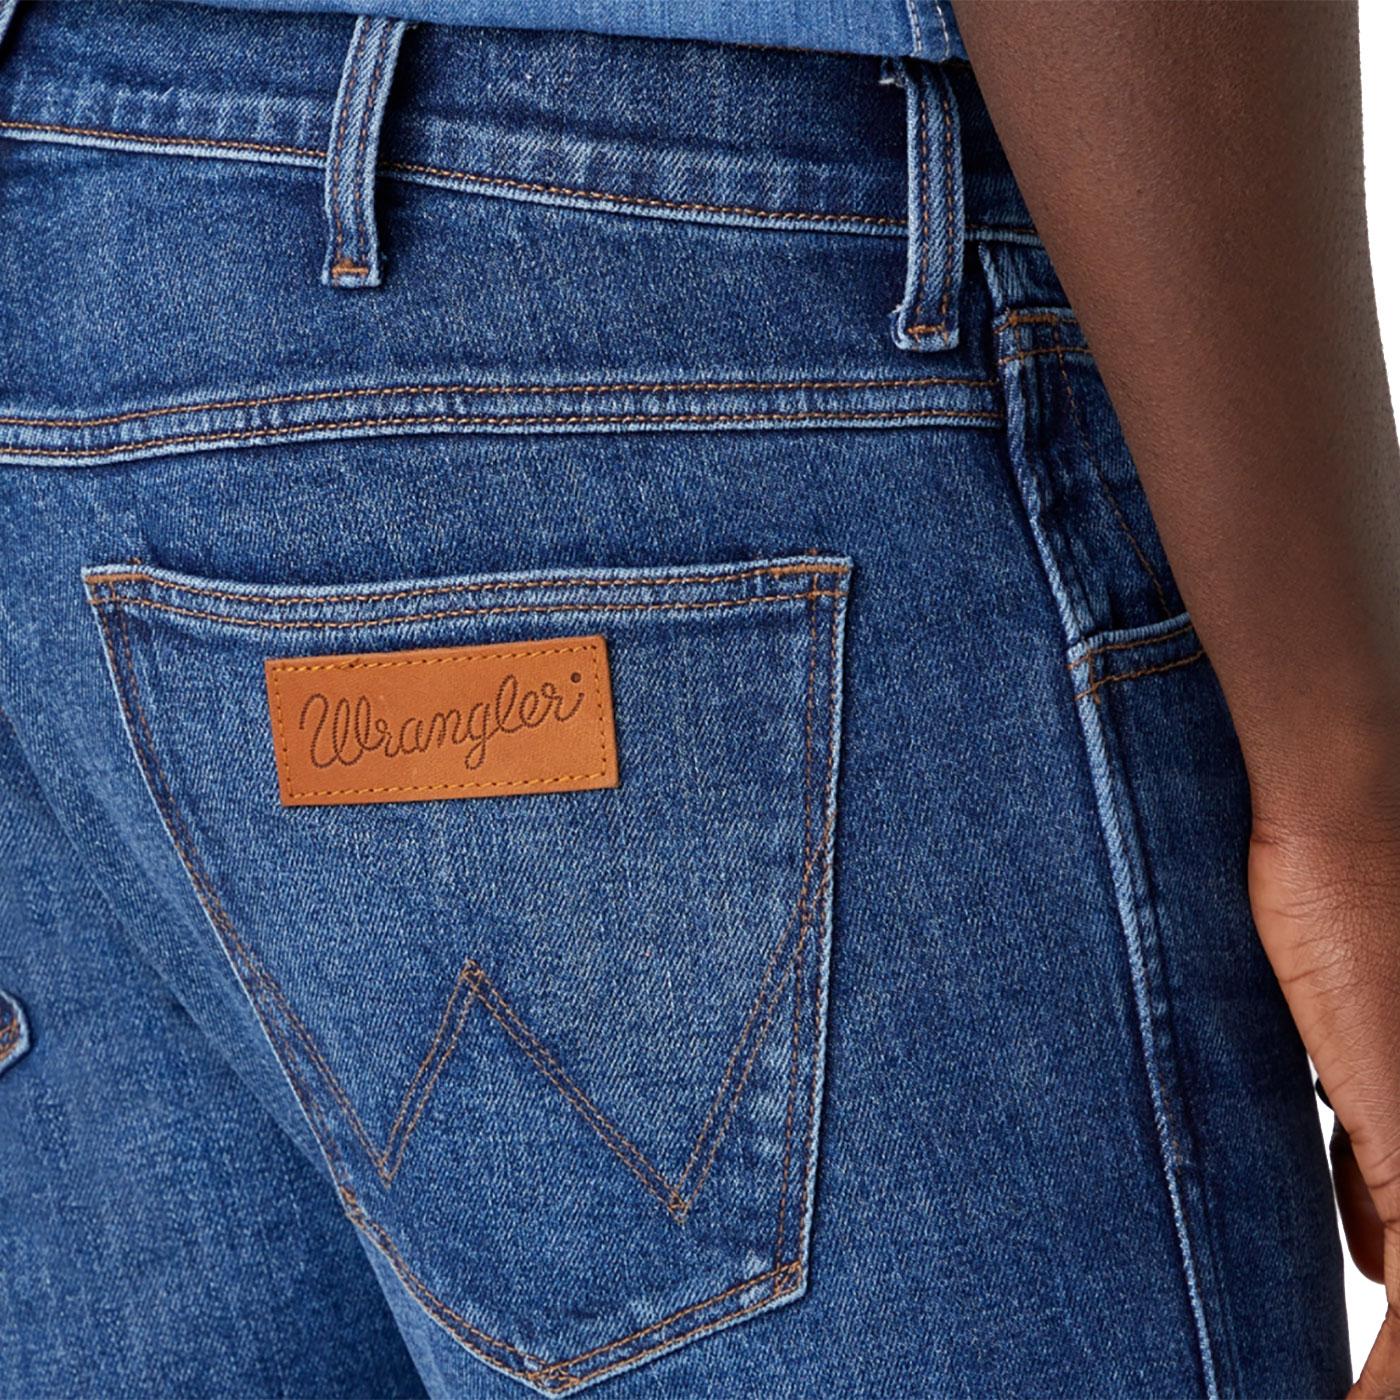 WRANGLER 'Bryson' Mens Washed Skinny Jeans in Hard edge